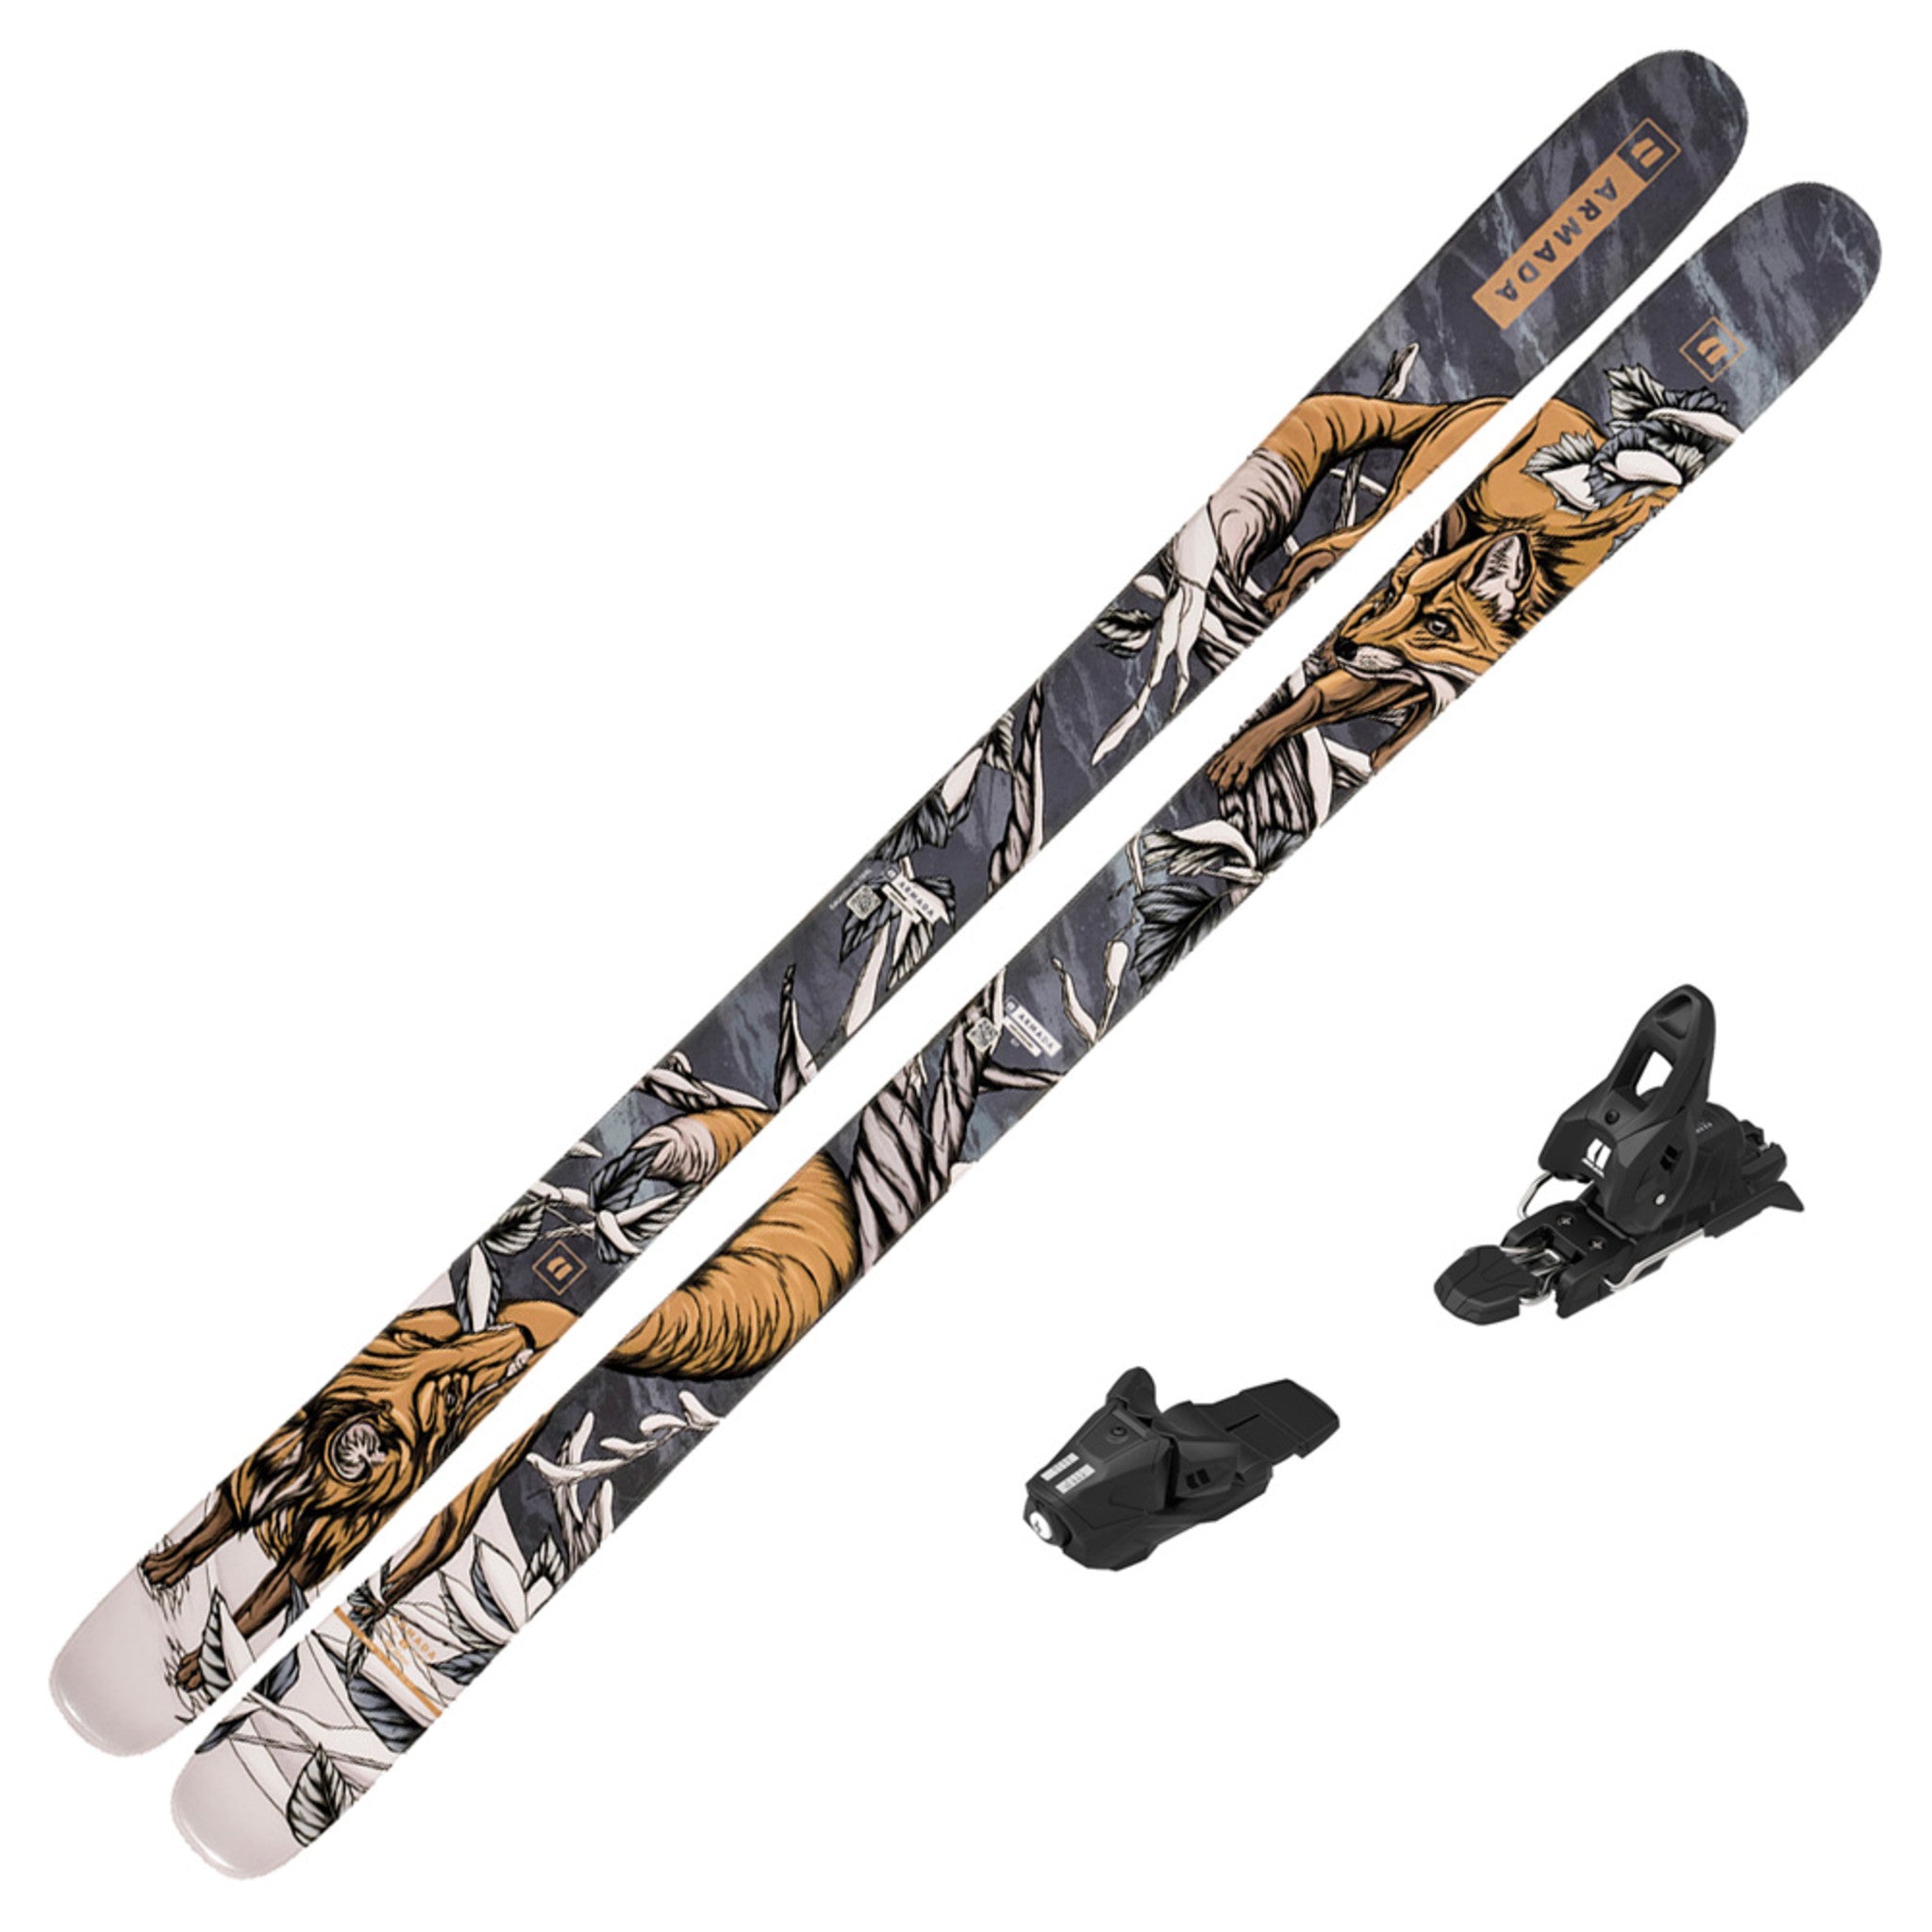 2023 Armada ARV 84 Ski w/ Bindings – Ski Essentials